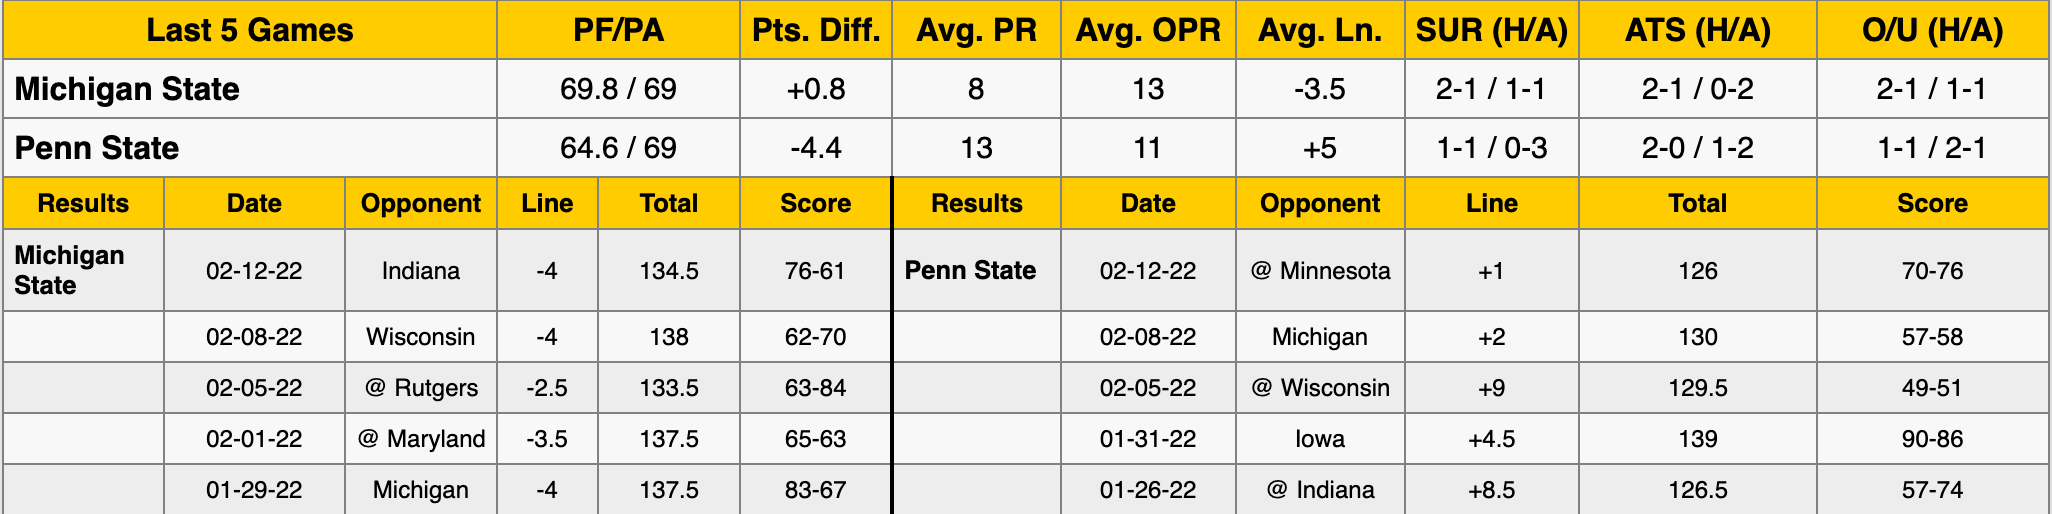 Michigan State vs Penn State Data